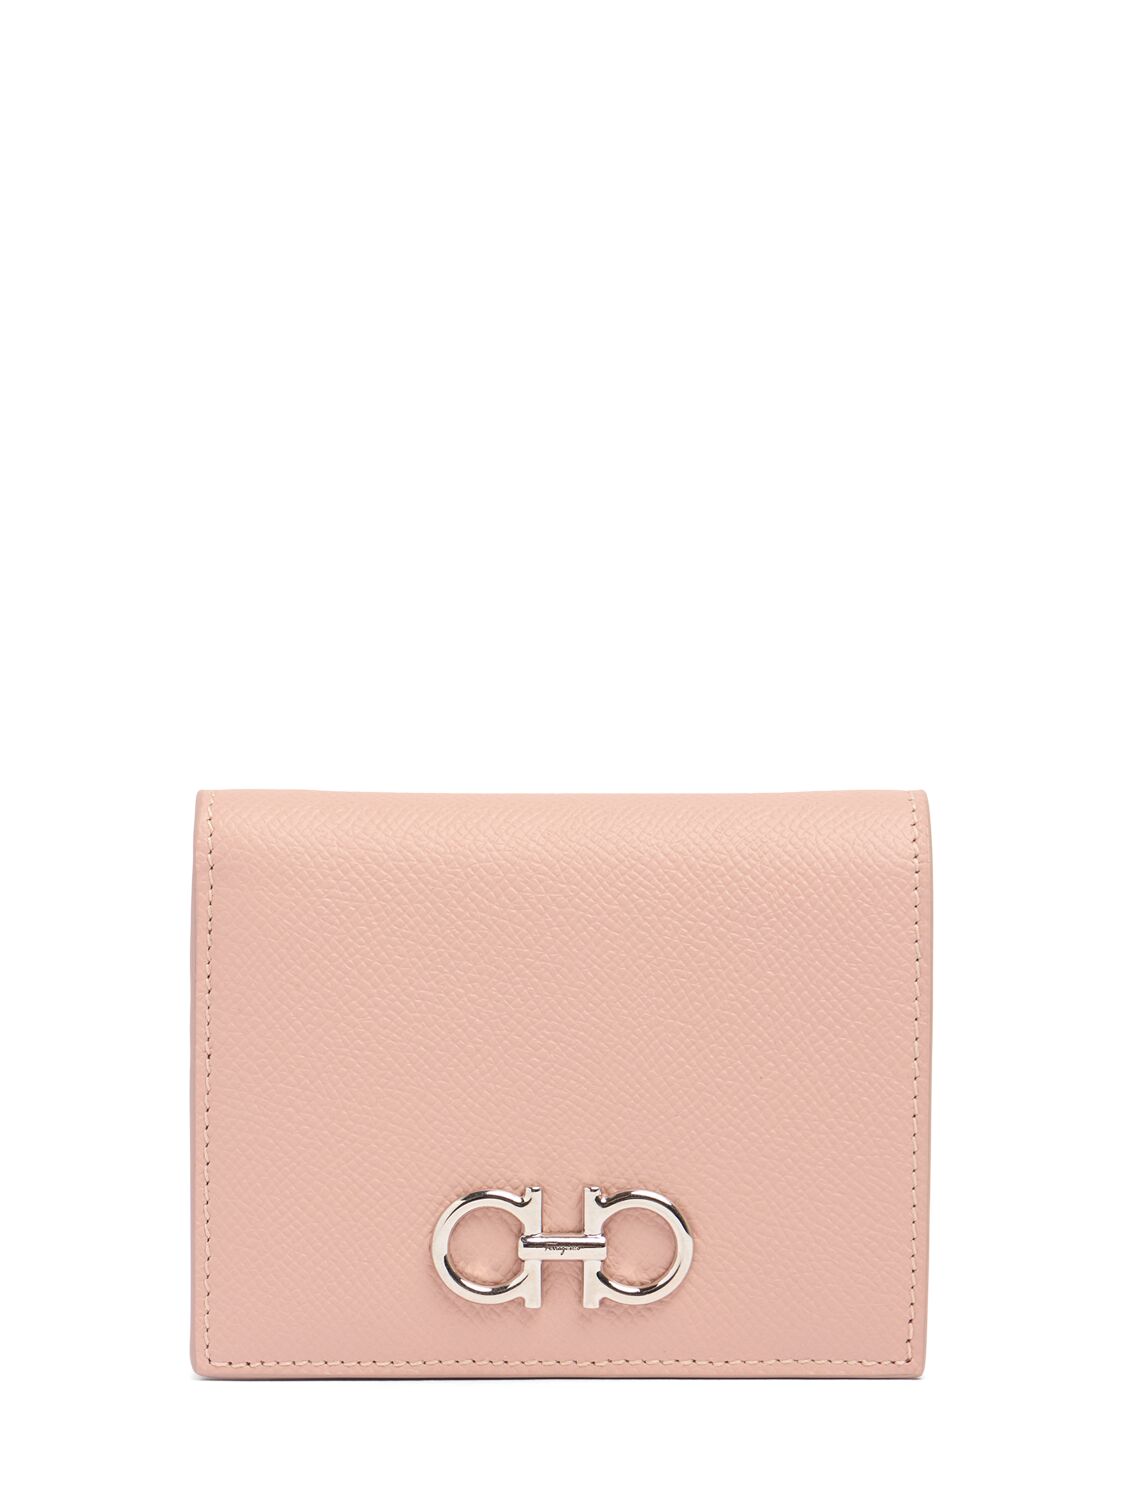 Ferragamo Gancini French Leather Wallet In Rose